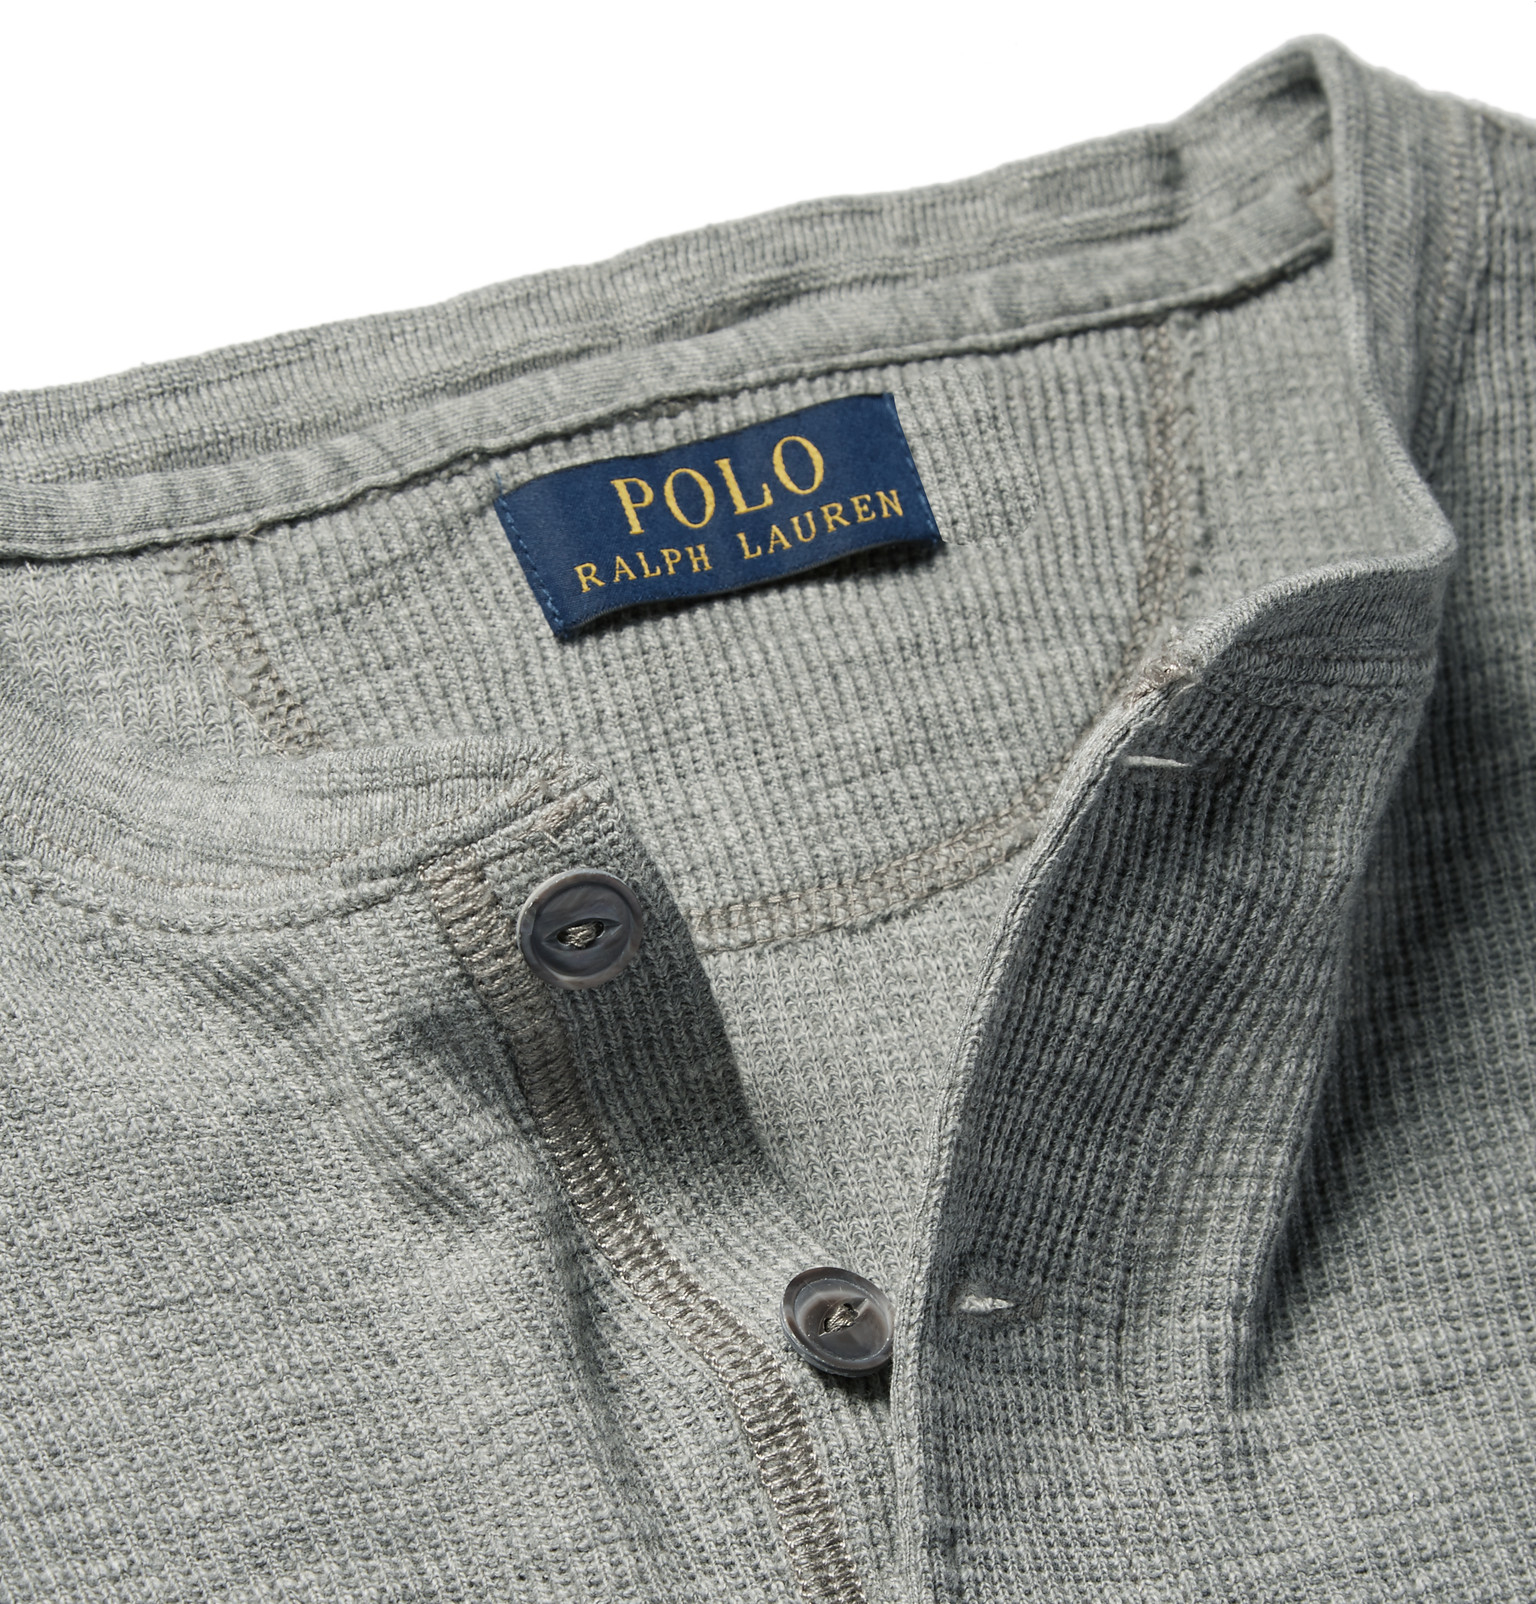 Polo Ralph Lauren Waffle-knit Cotton Henley T-shirt in Gray for Men - Lyst